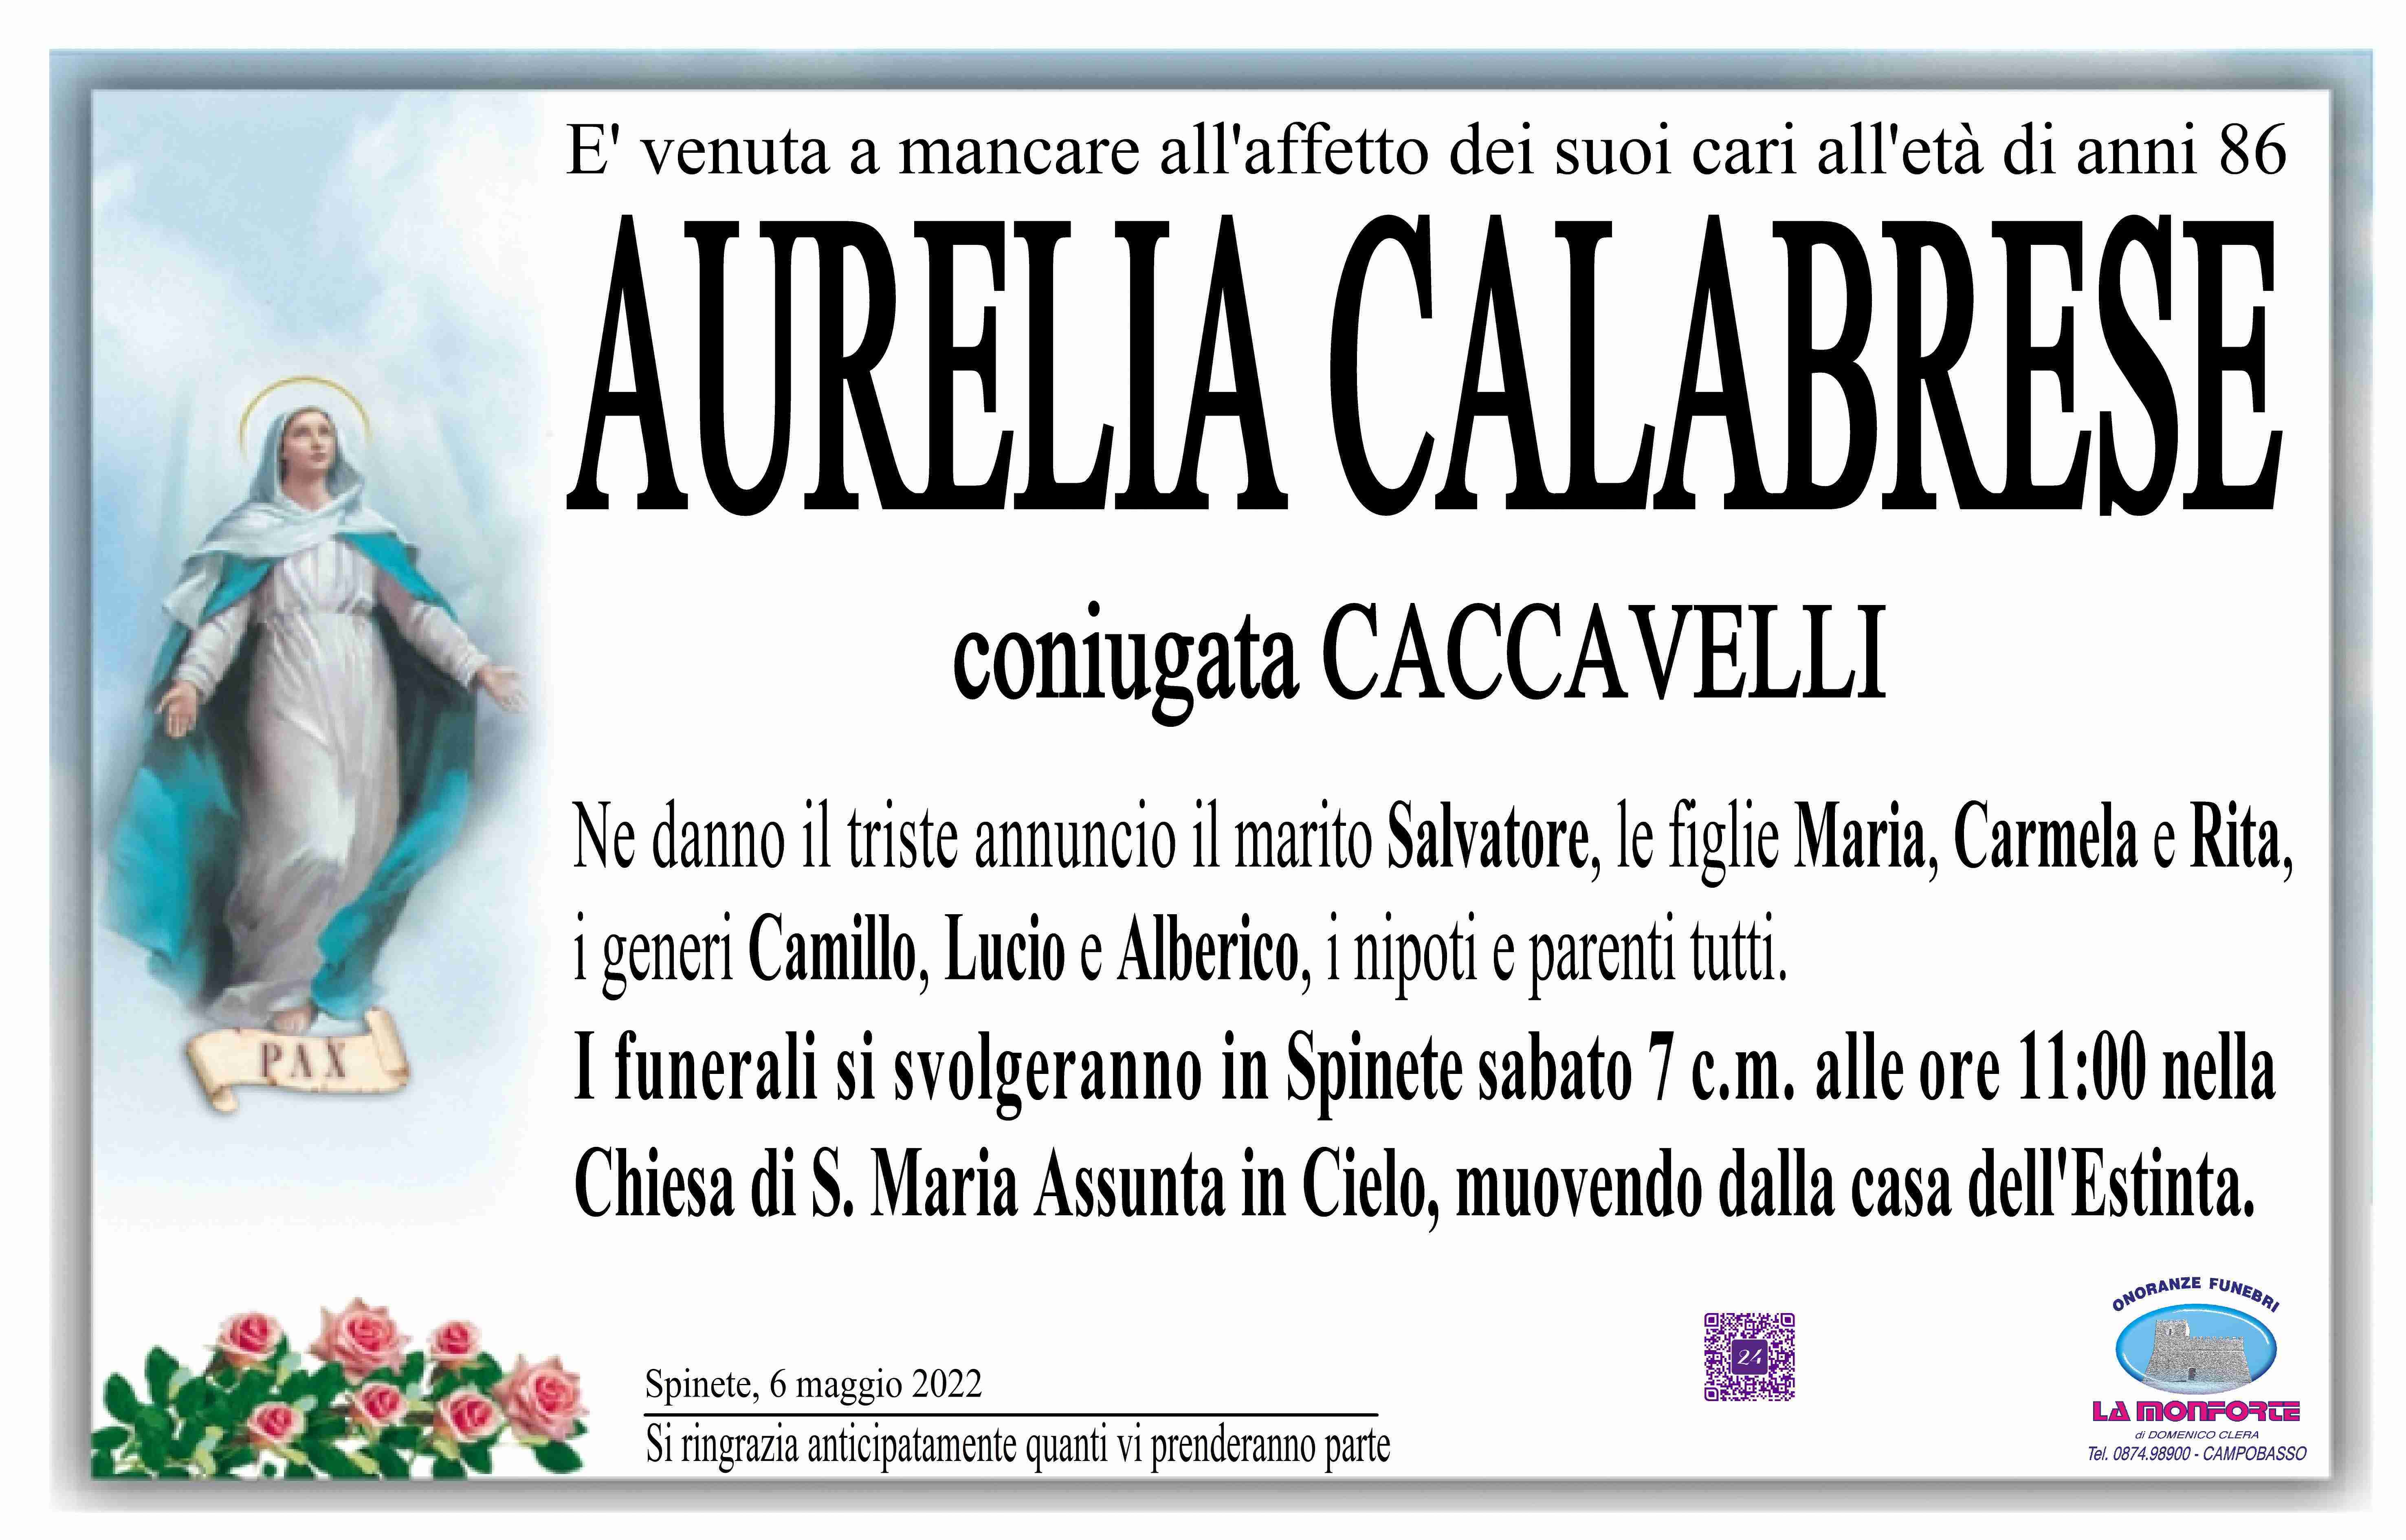 Aurelia Calabrese